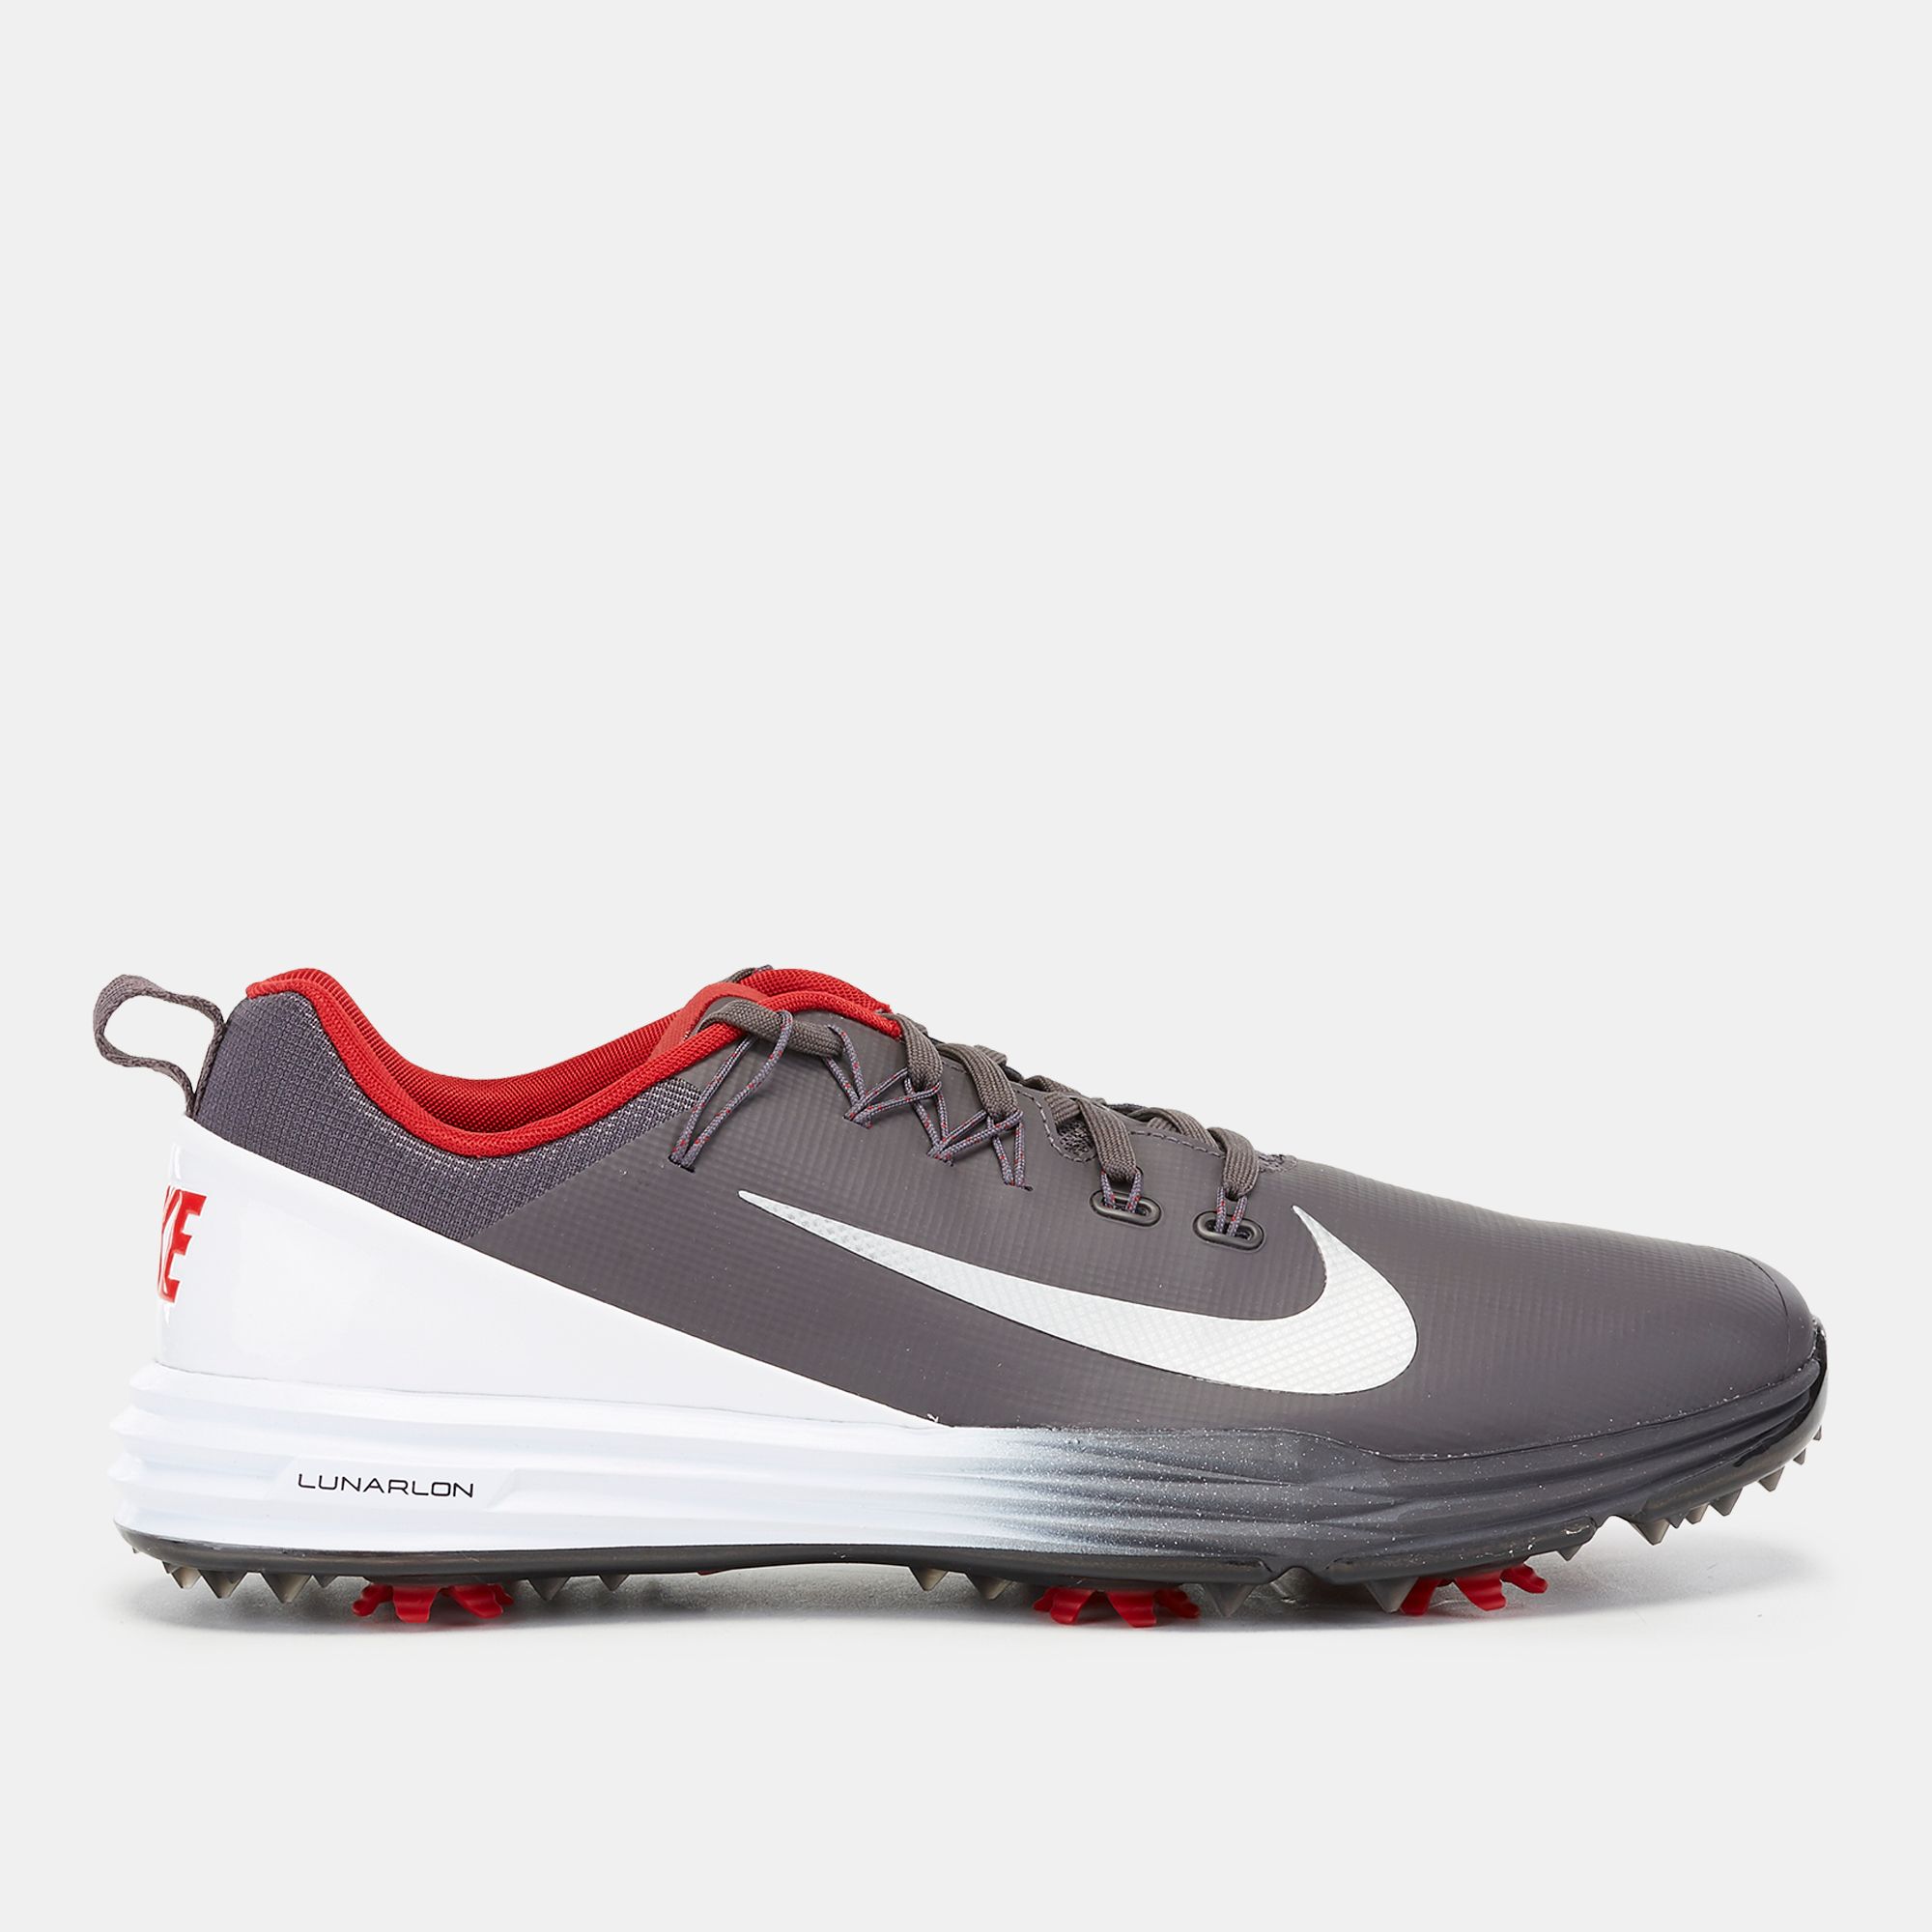 Nike Golf Lunar Command 2 Shoe | Golf 